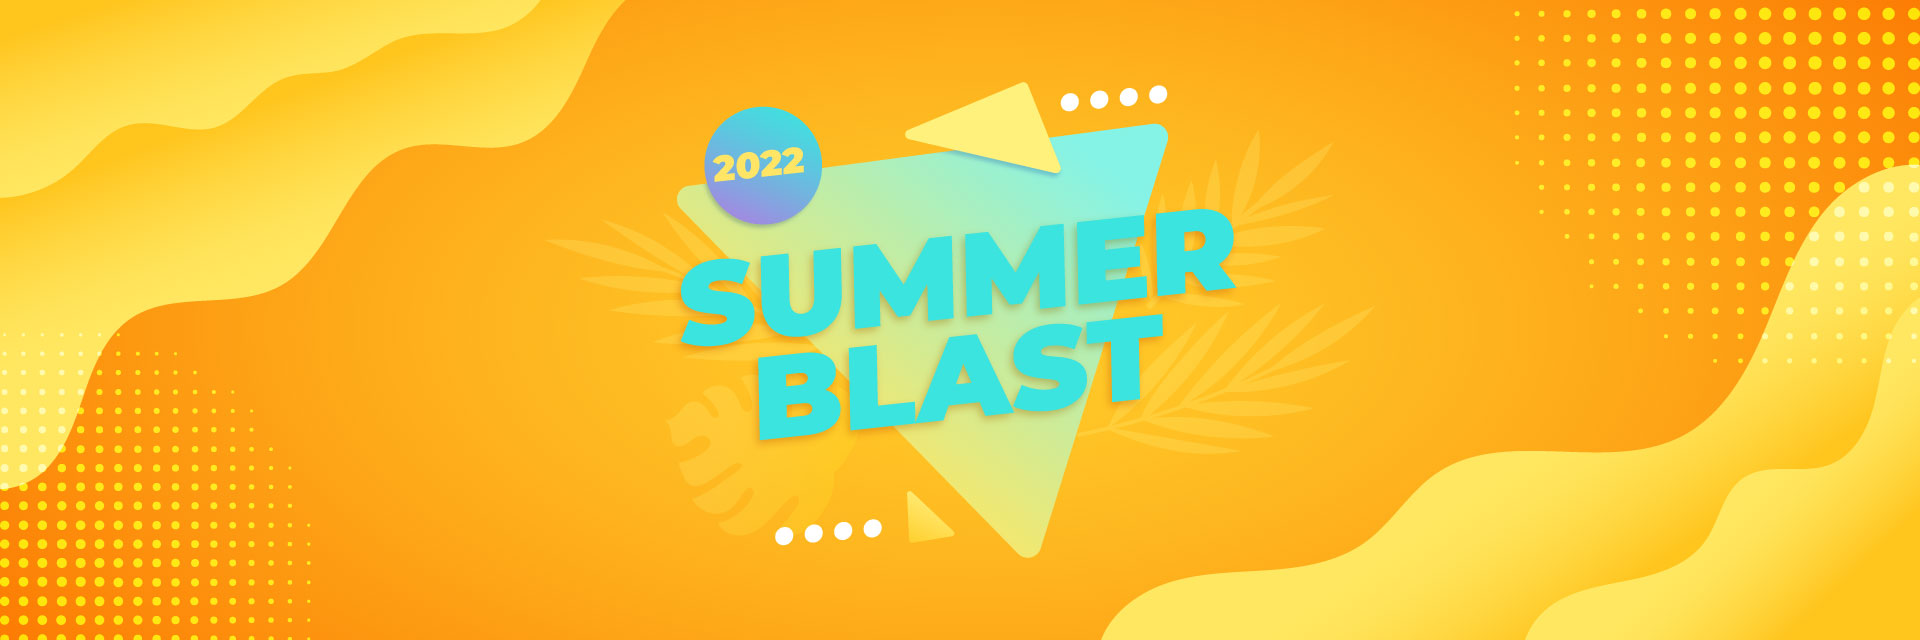 Summer Blast 2022